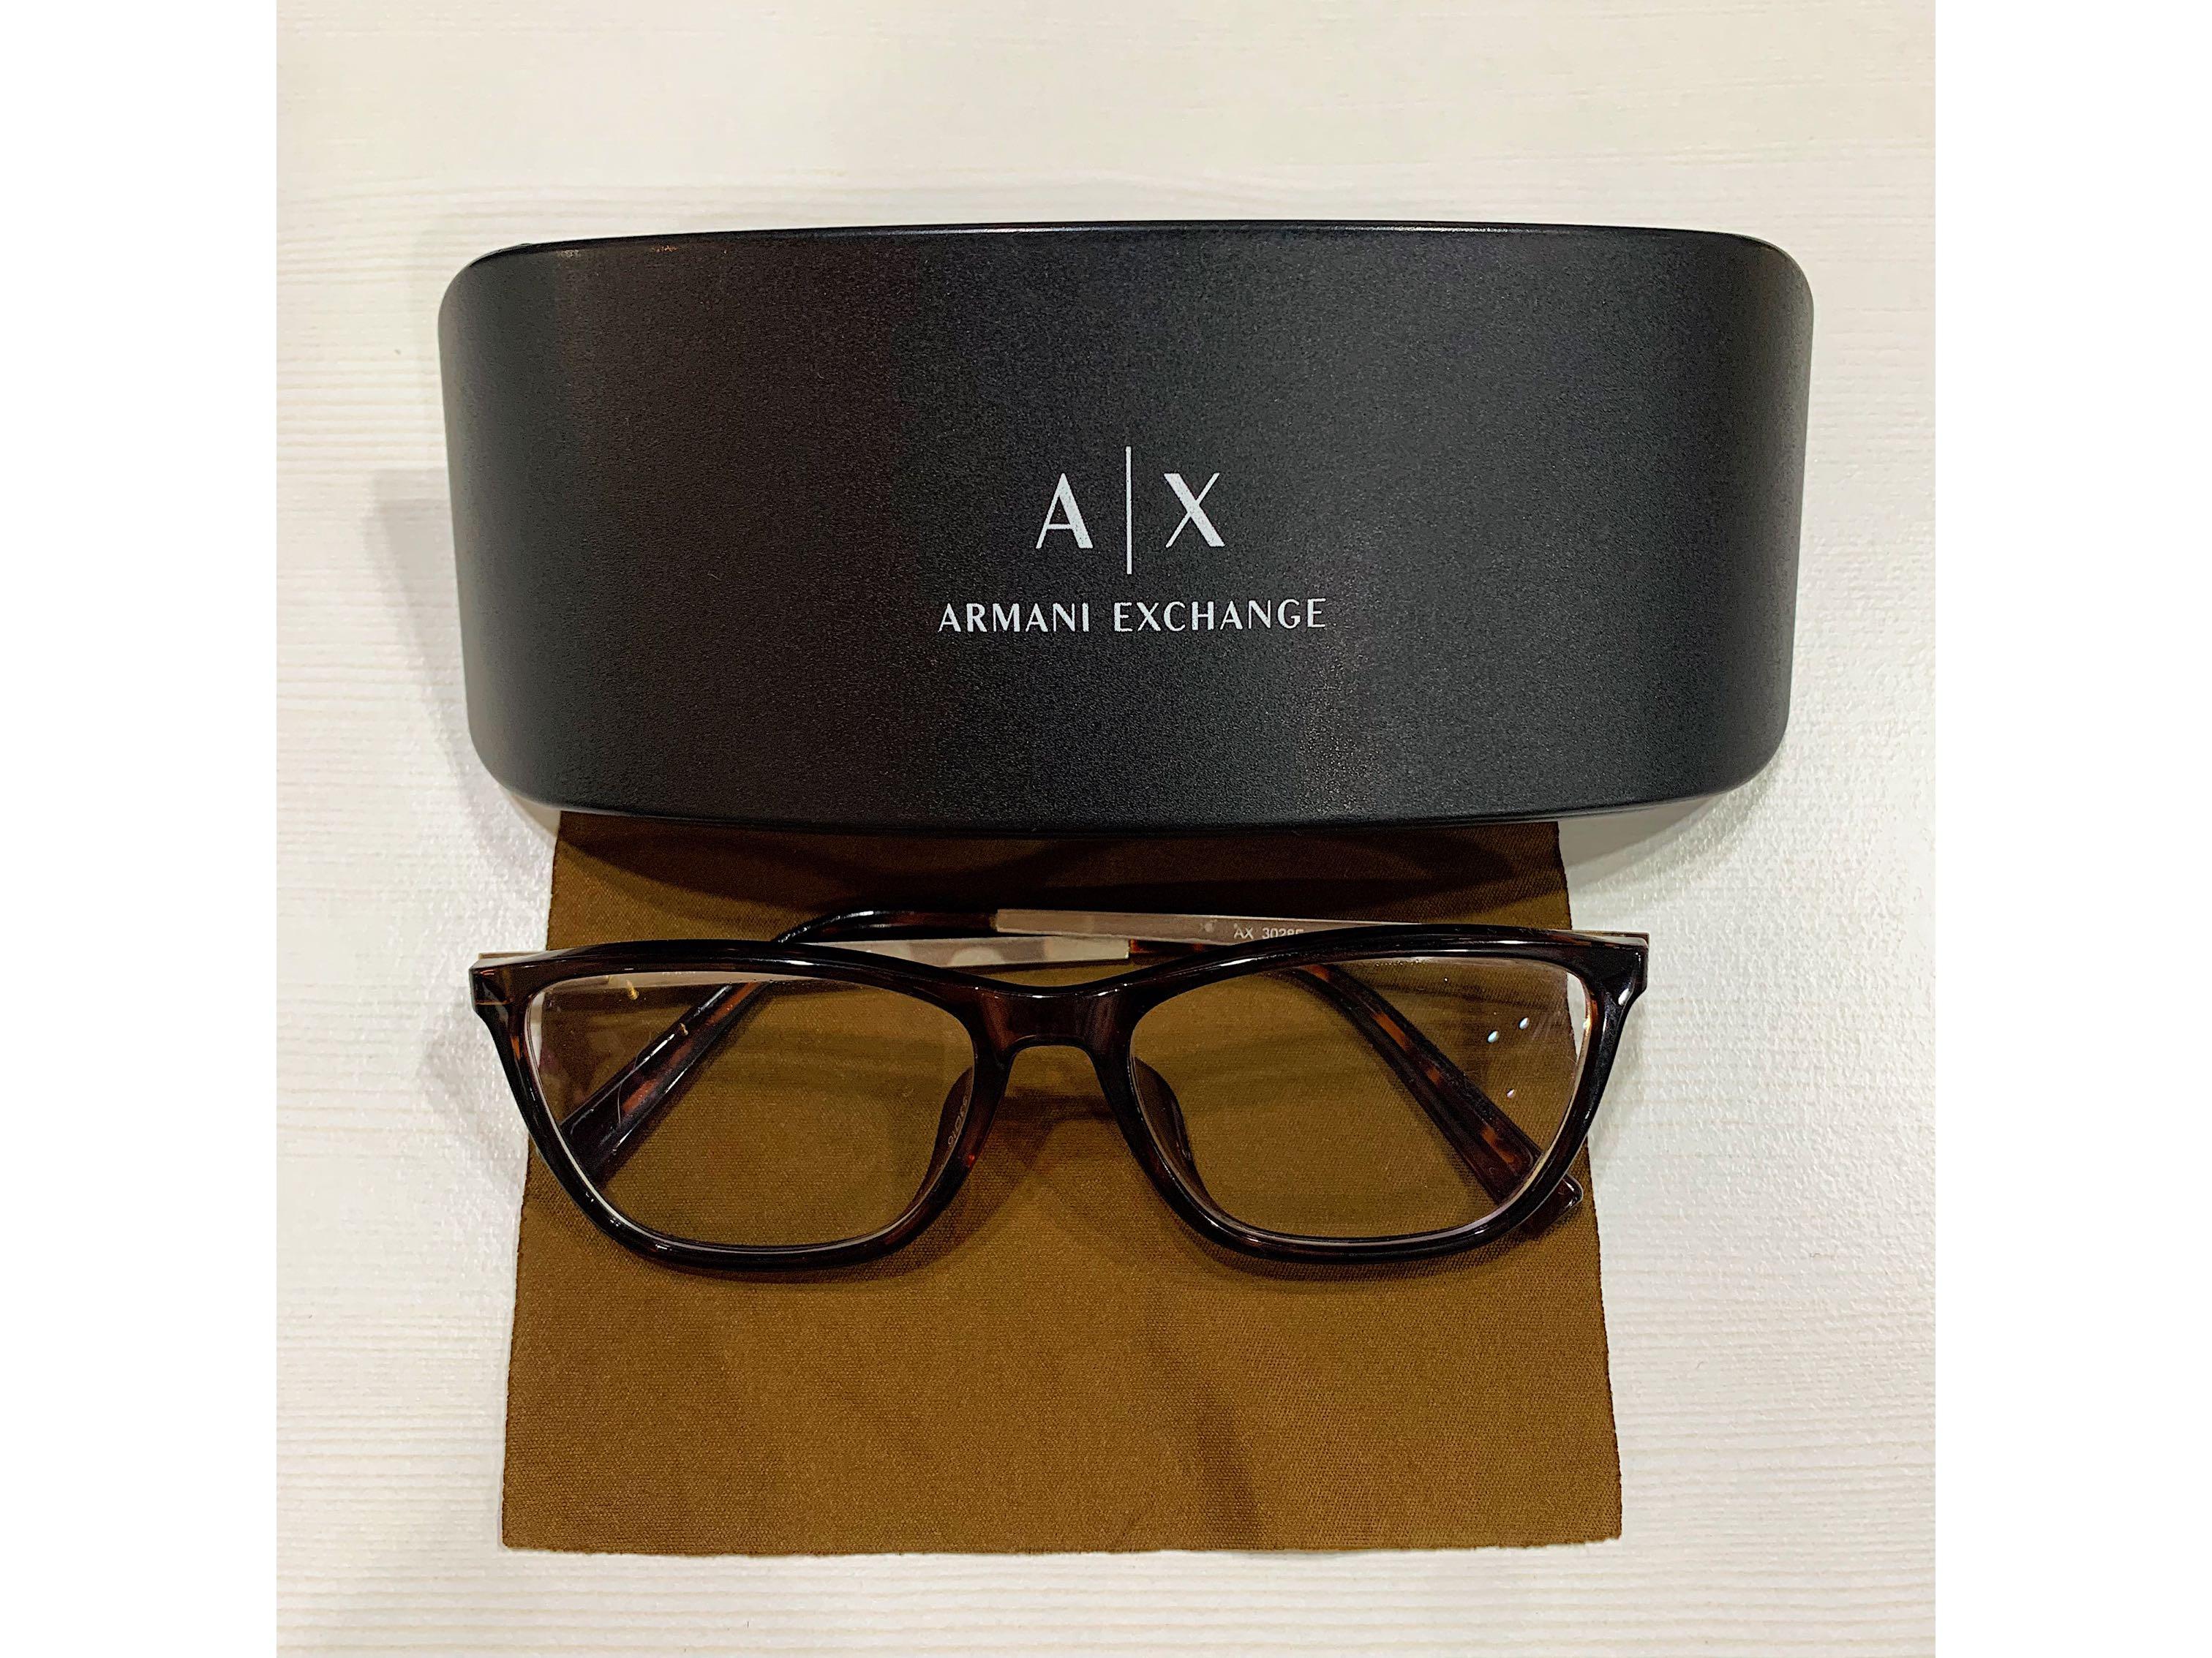 Descubrir 51+ imagen armani exchange glasses - Abzlocal.mx